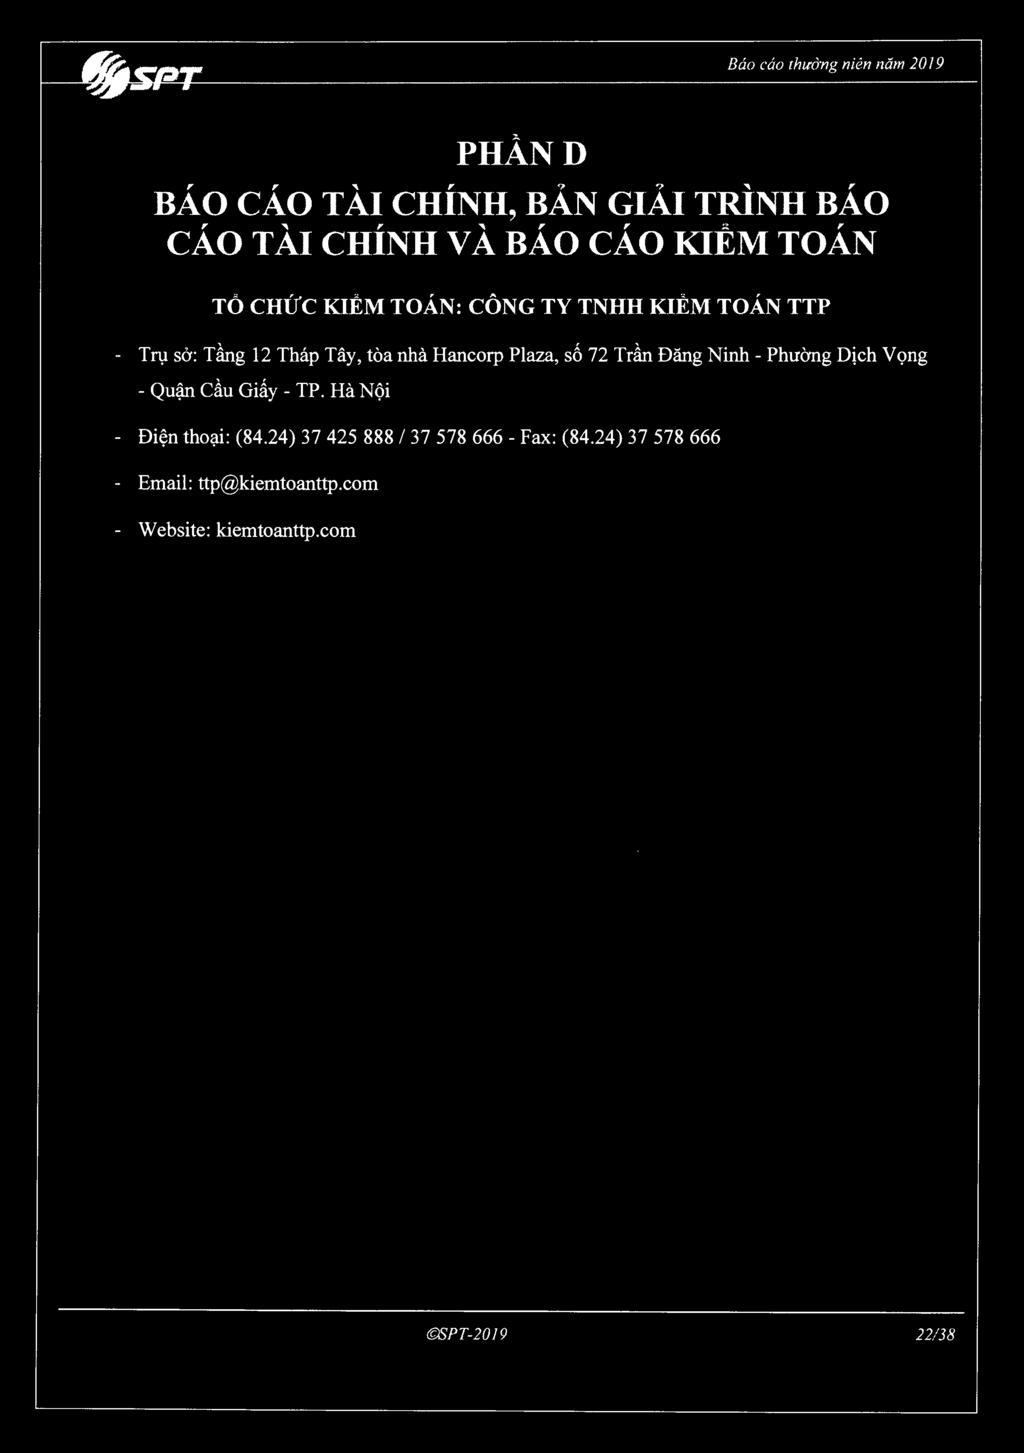 s6 72 Trfin Dang Ninh - Phuong Dich Vong - Quan cau Giay - TP. Hi NQi - Dien thoai: (84.